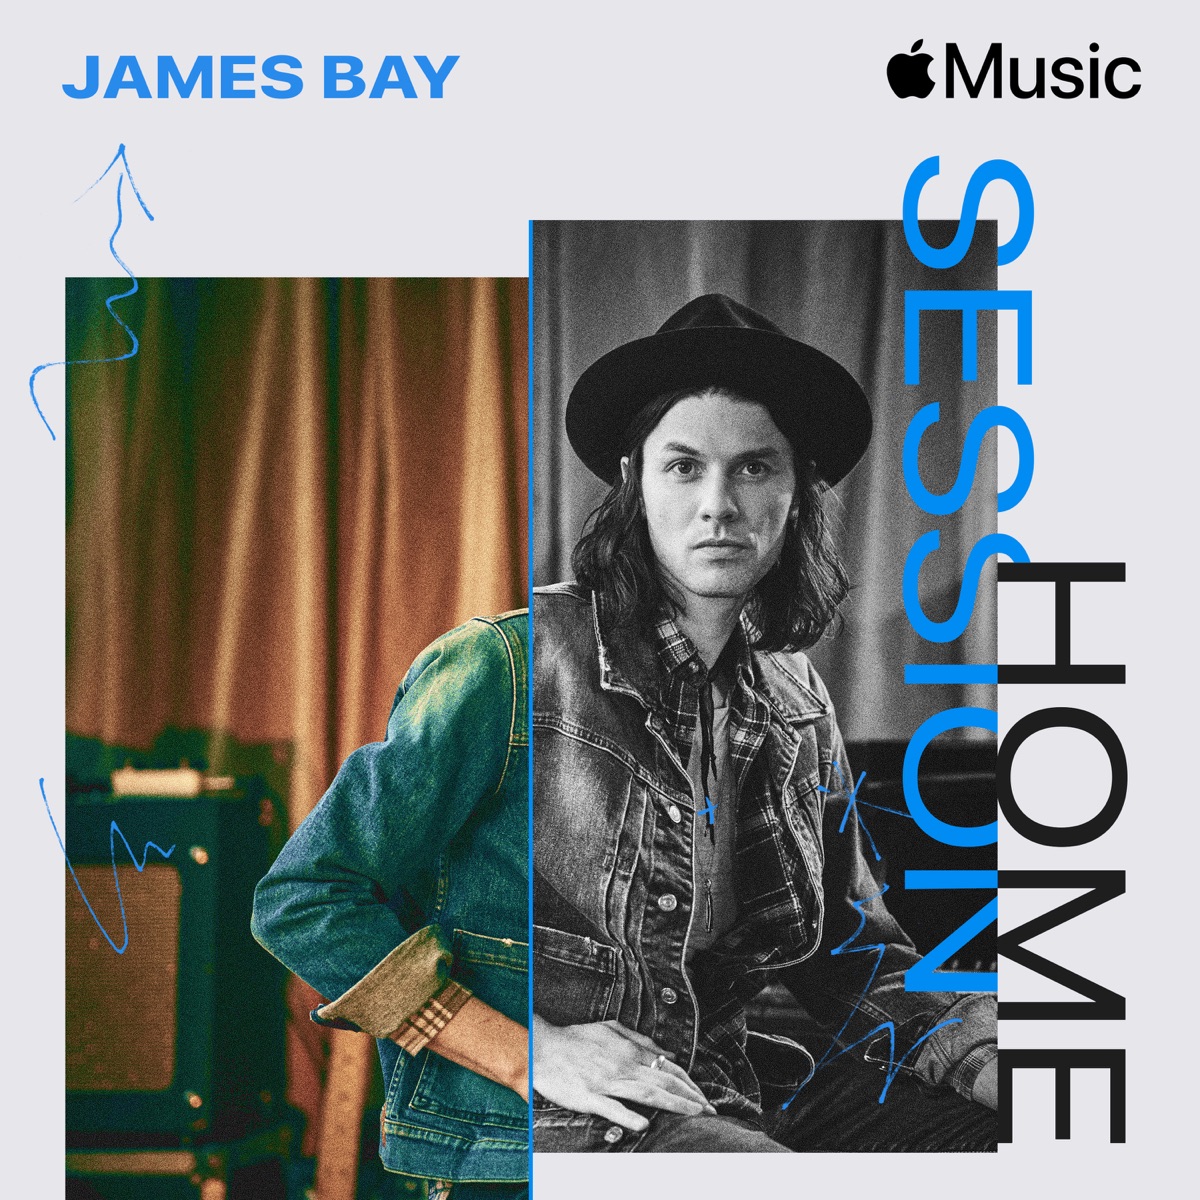 James Bay - Goodbye Never Felt So Bad 